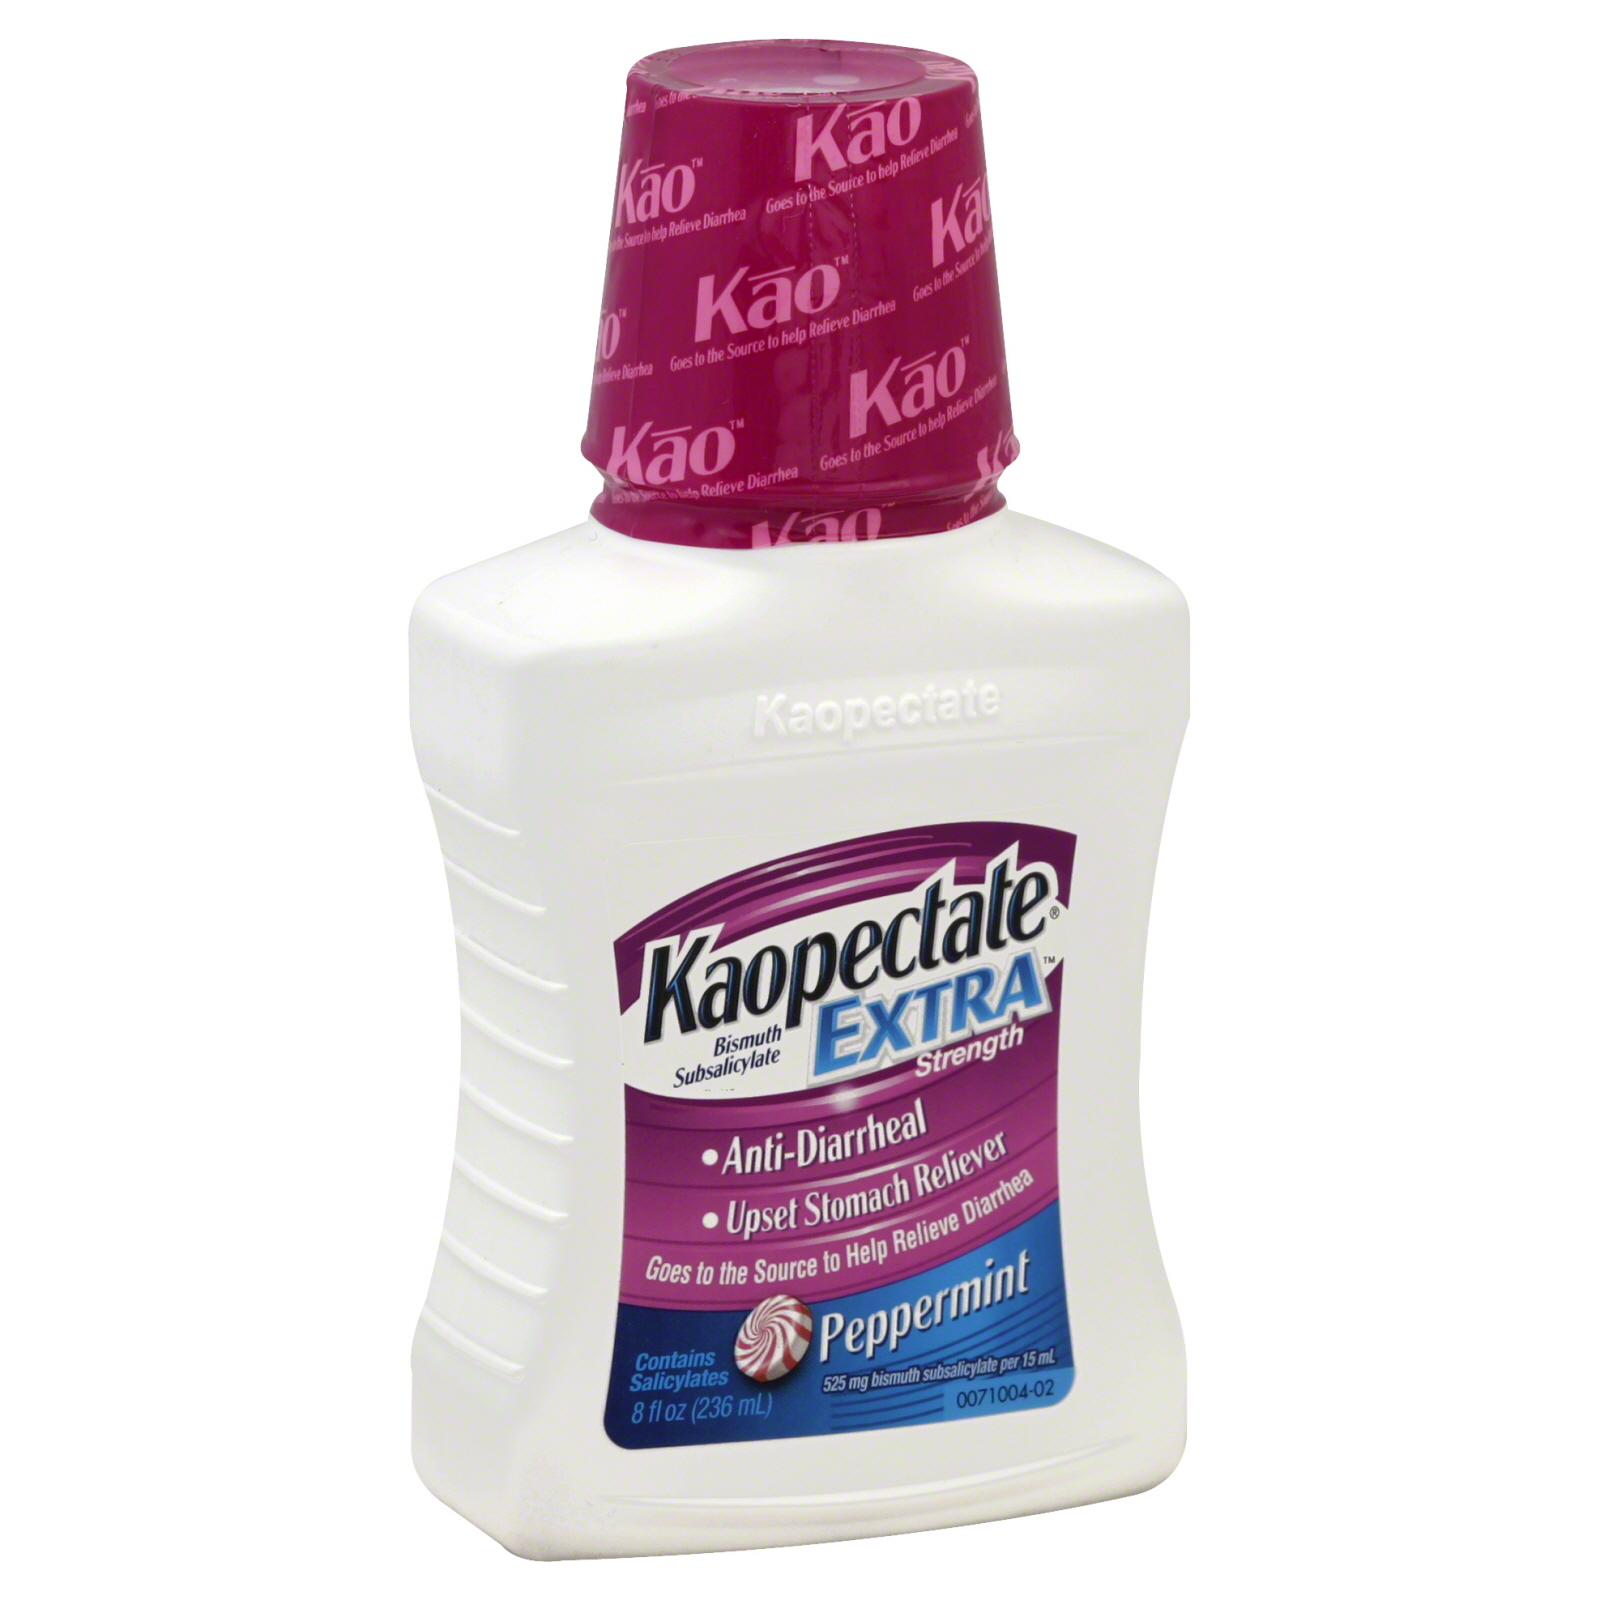 Kaopectate Anti-Diarrheal/Upset Stomach Reliever, Extra Strength, Peppermint, 8 fl oz (236 ml)